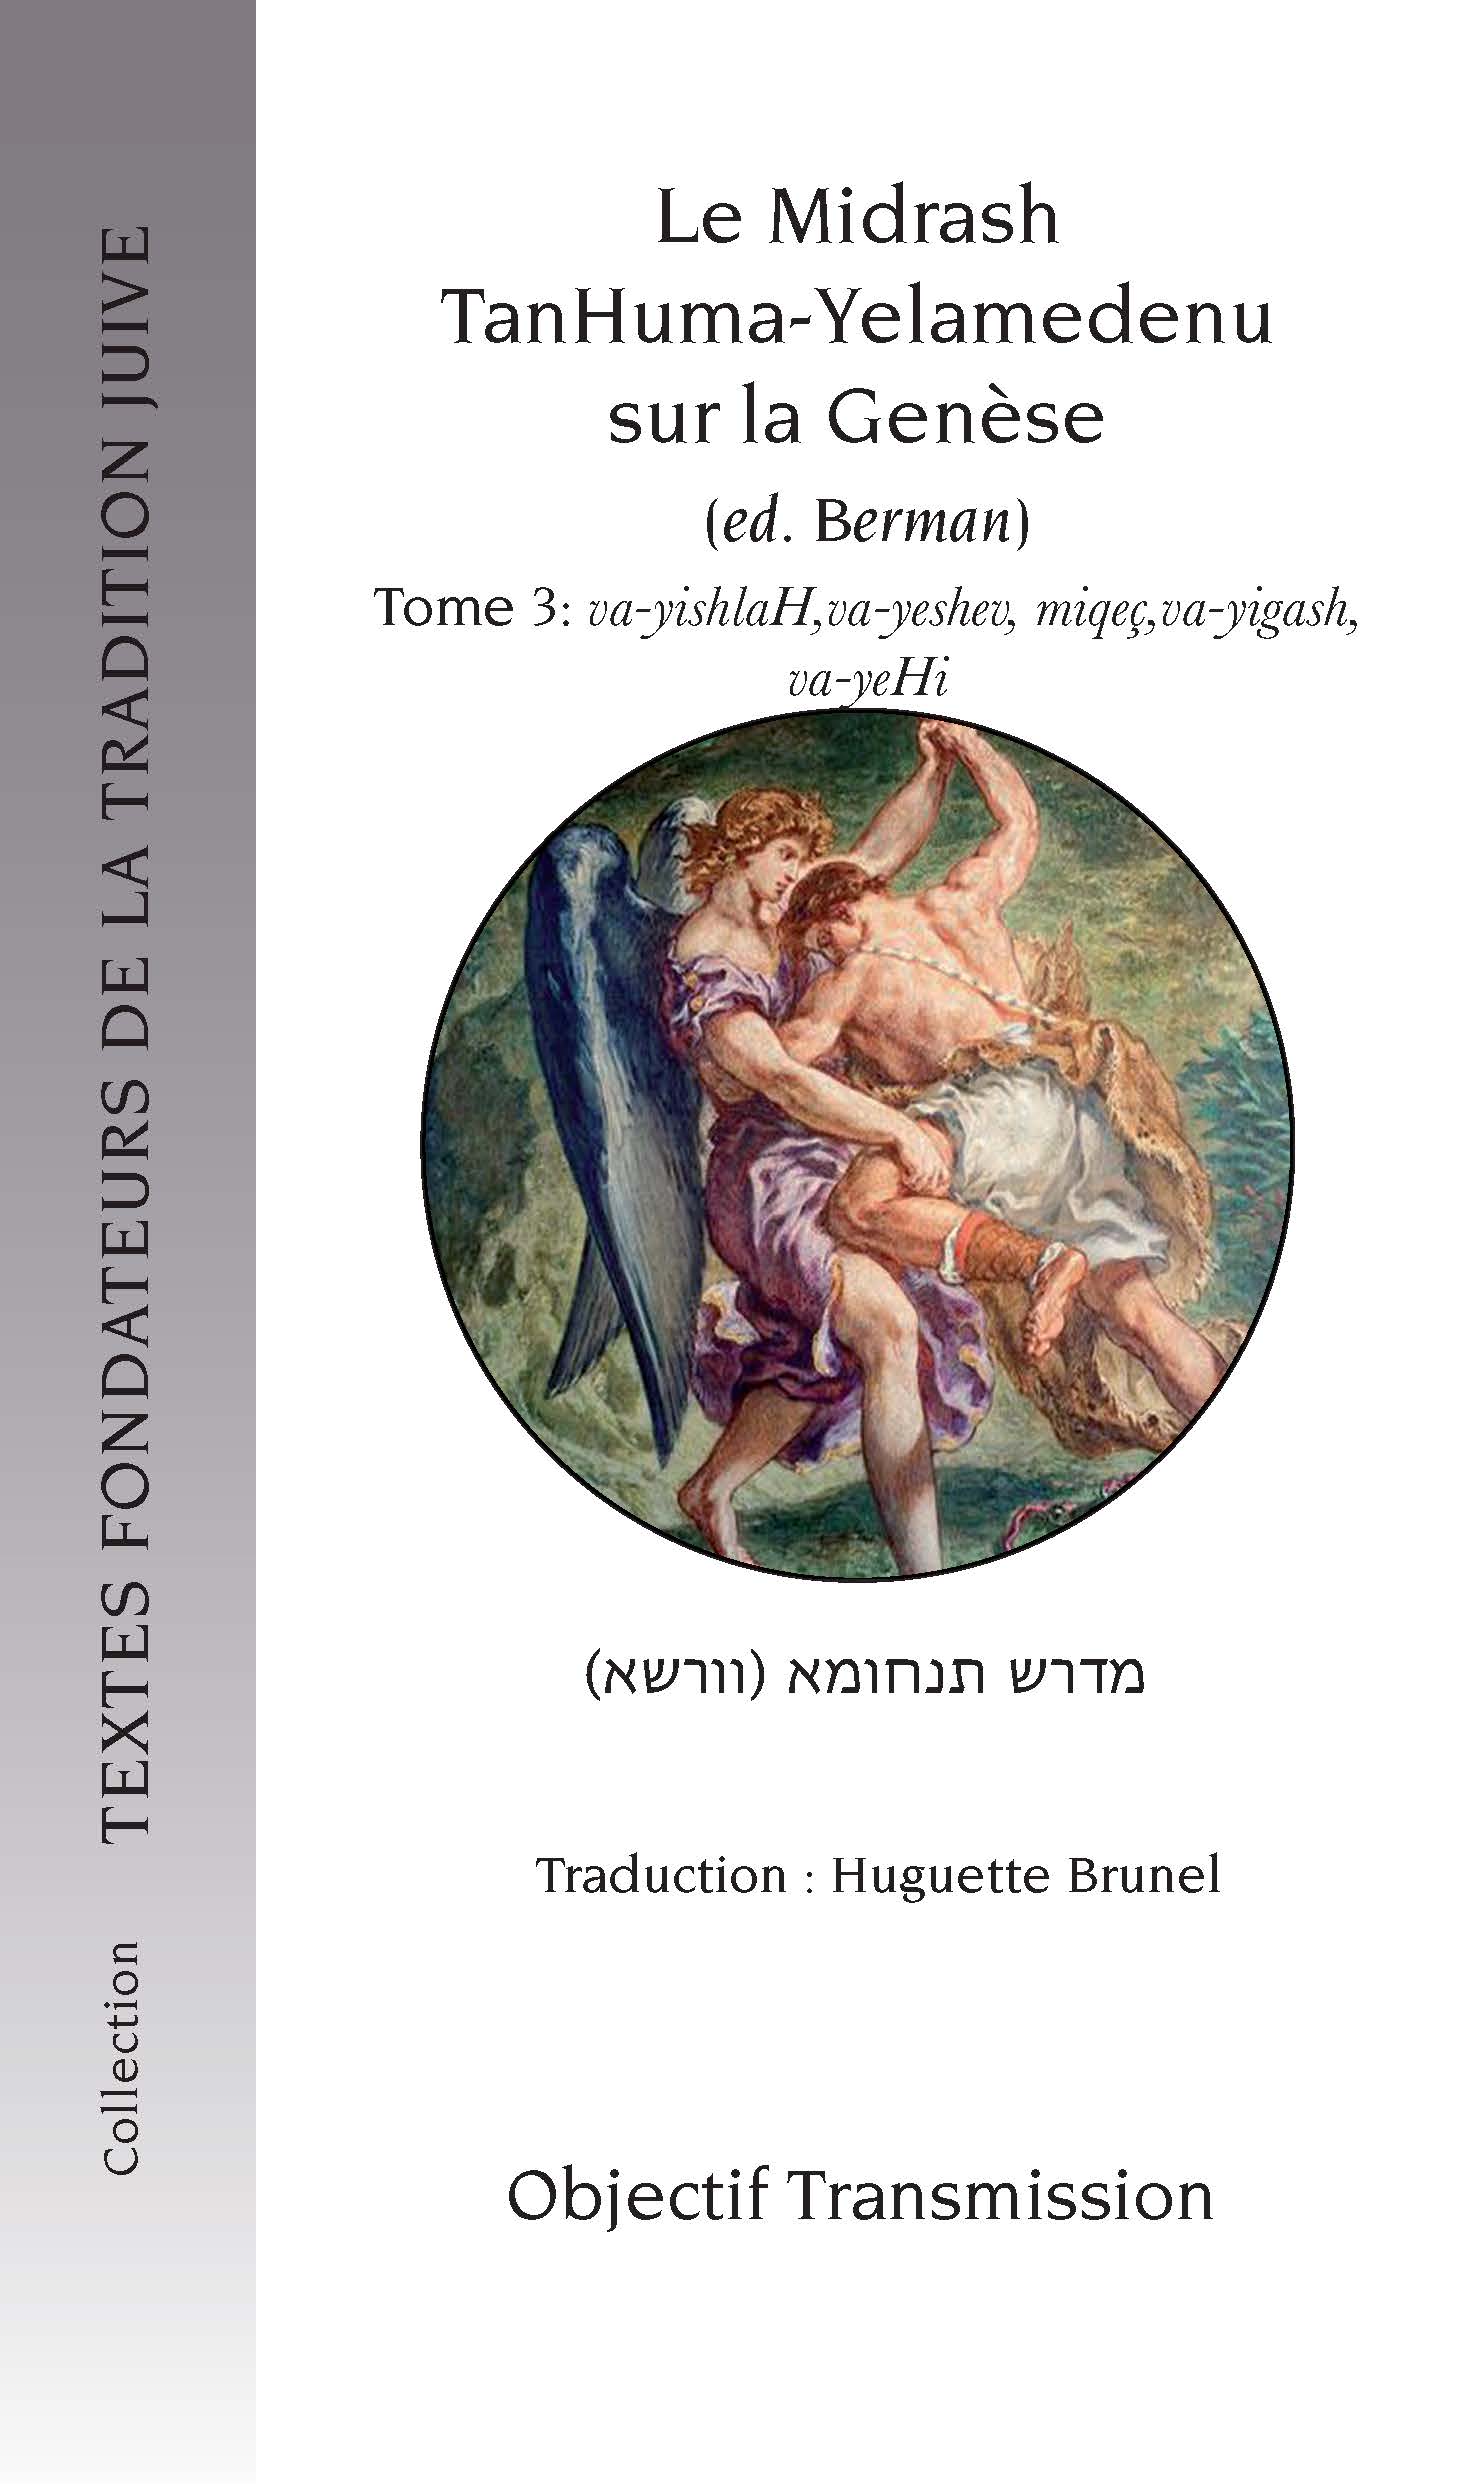 Le Midrash TanHuma-Yelamedenu sur la Genèse (version Berman) Tome 3 